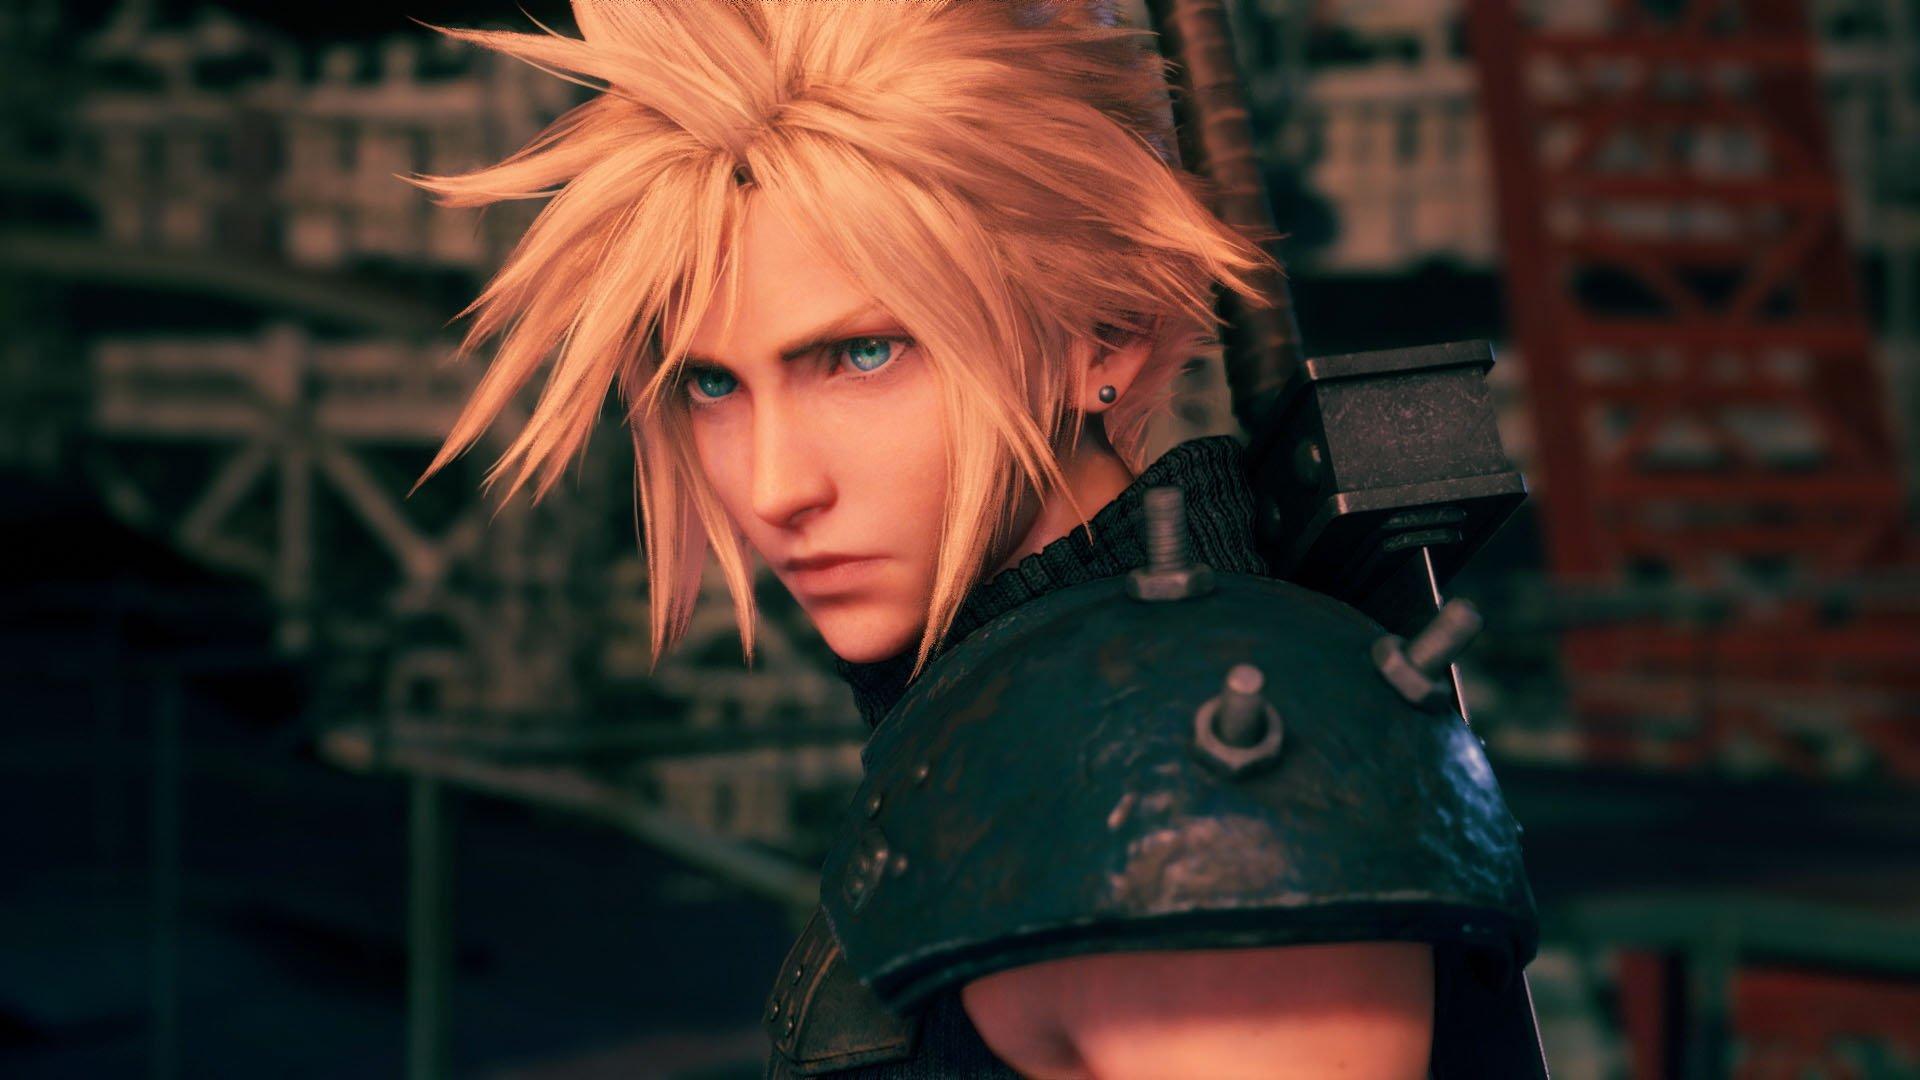 Final Fantasy 7 Remake - PS4 —